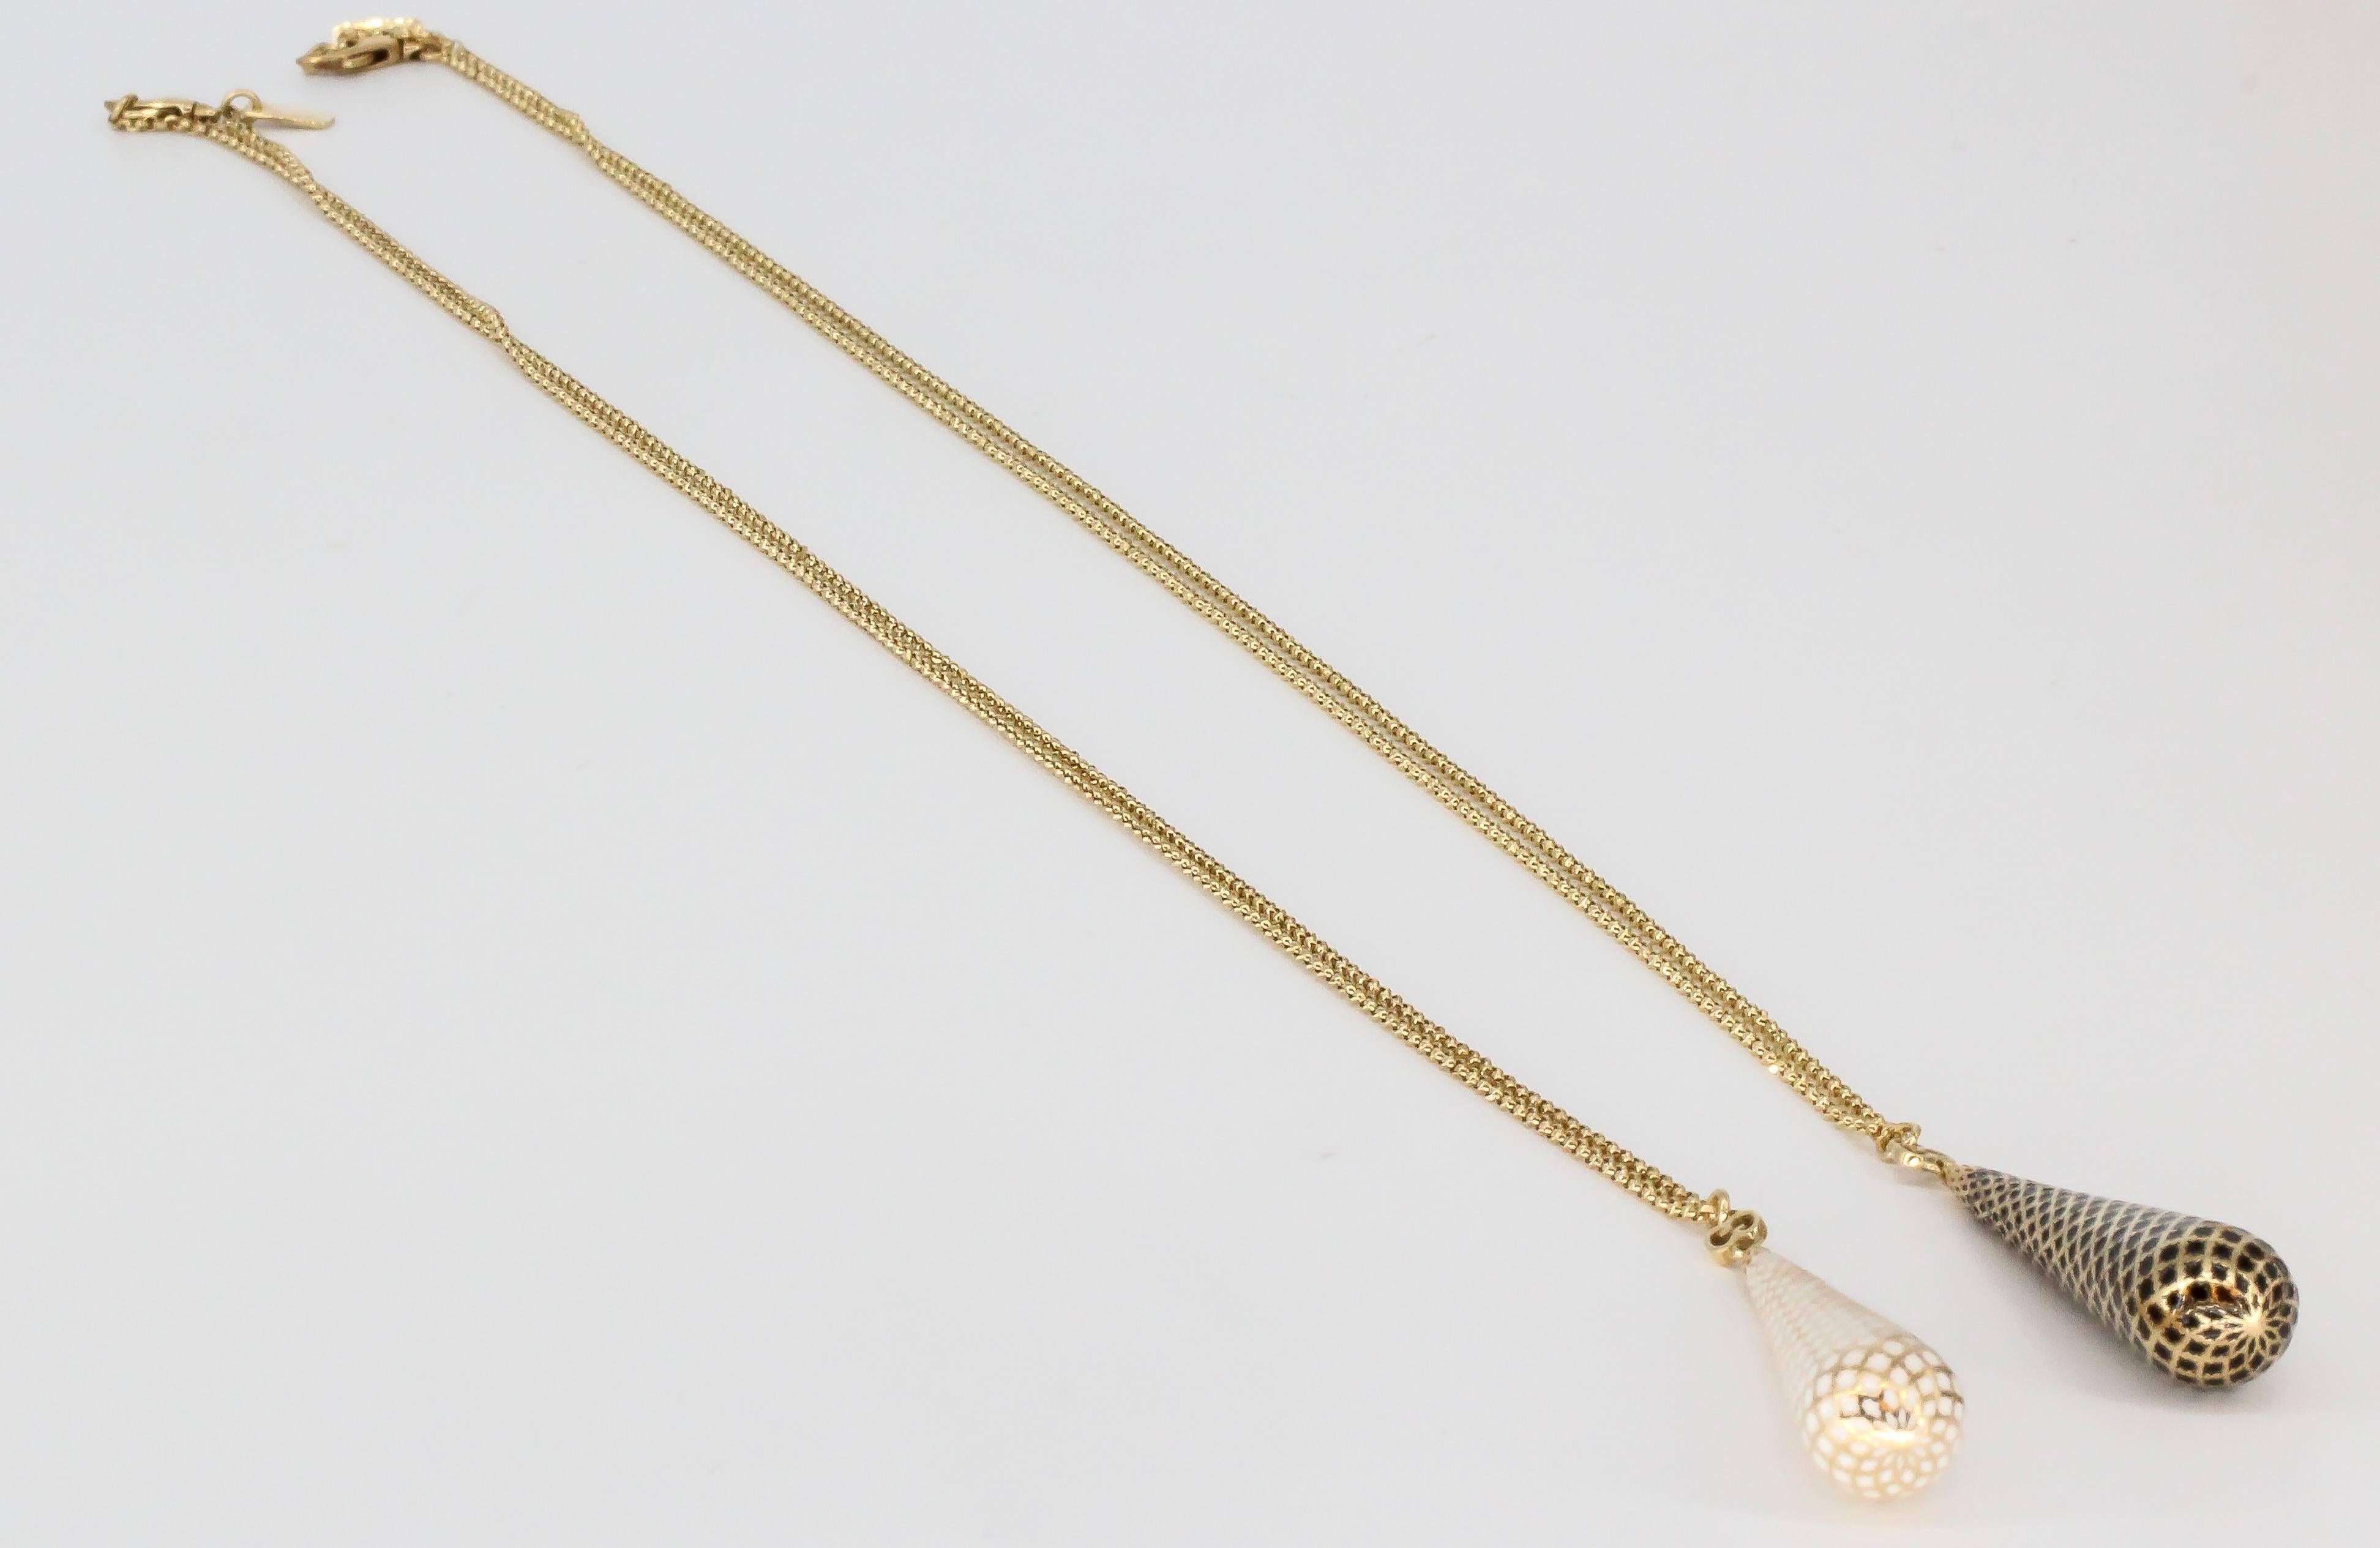 gucci diamantissima necklace with cross pendant